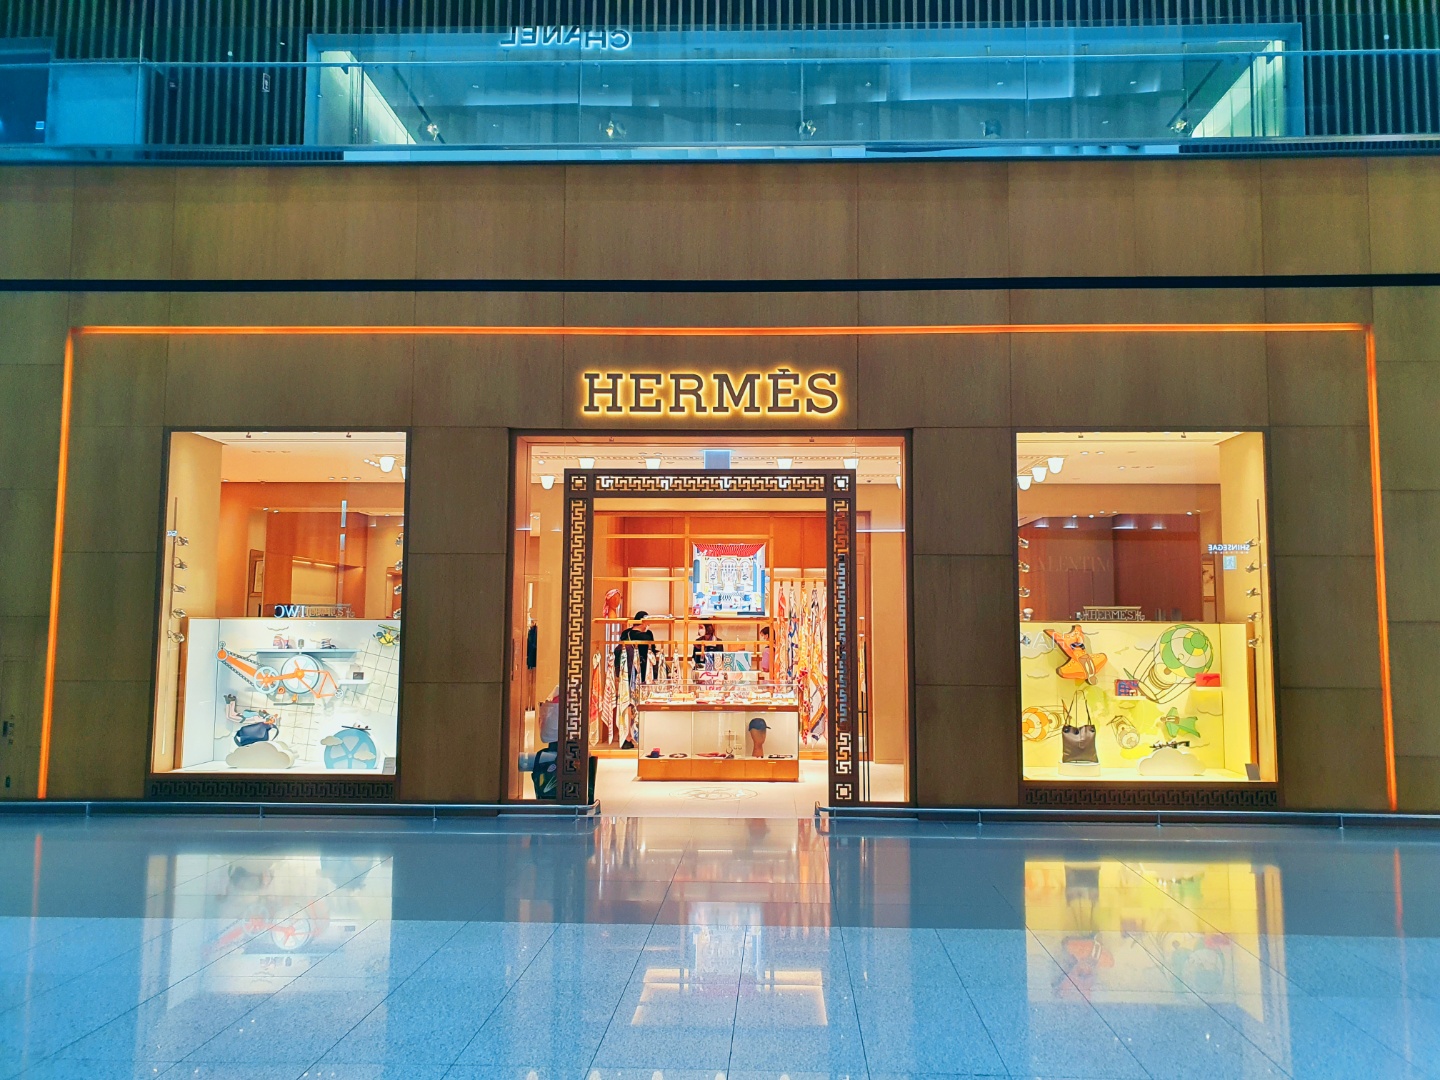 [Hermes’s anti-marketing window display reinforcing artistic sentiment. Photo Credit: Minso Kim]